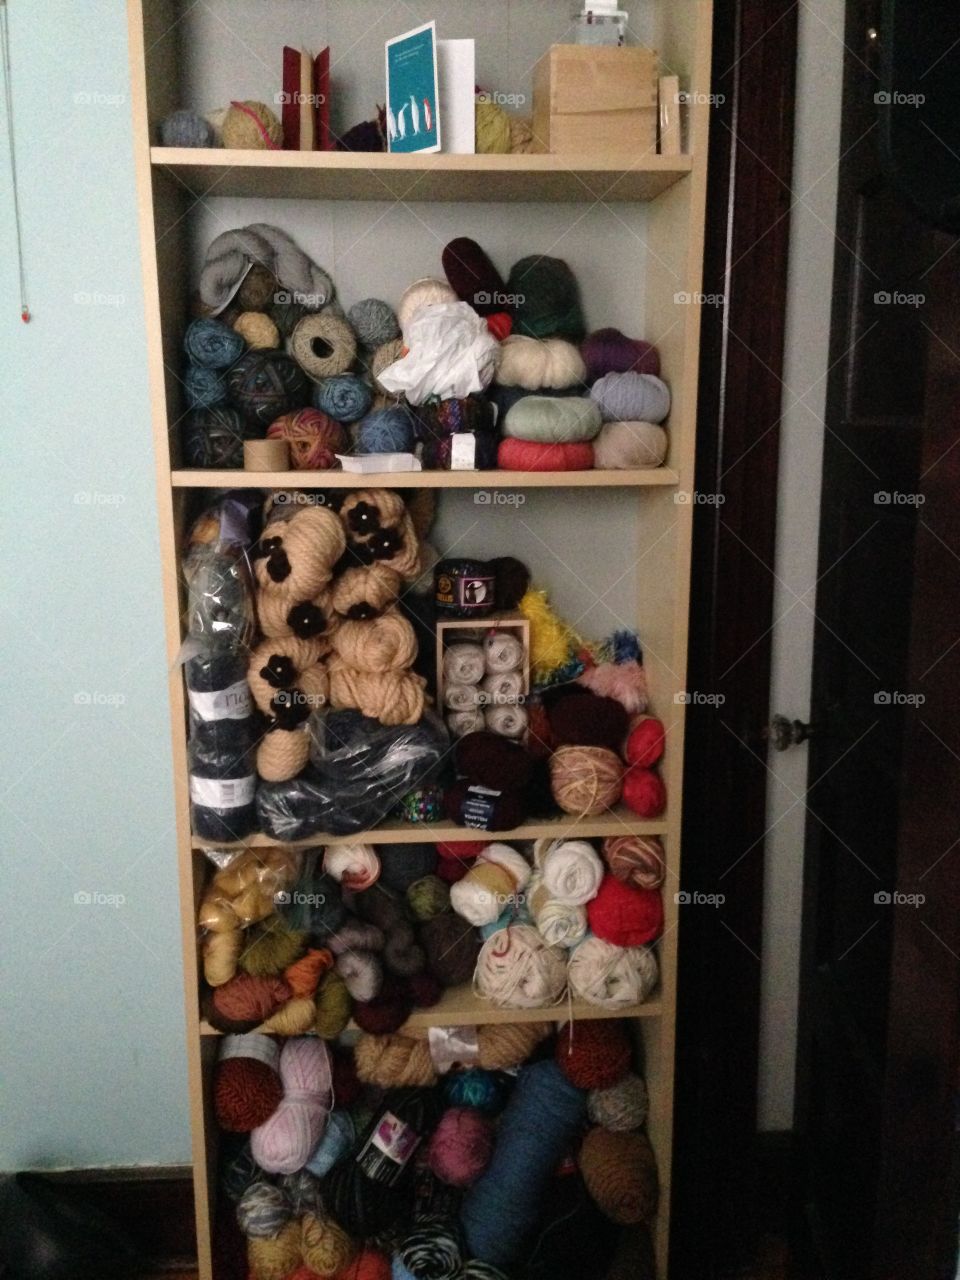 Yarn collection